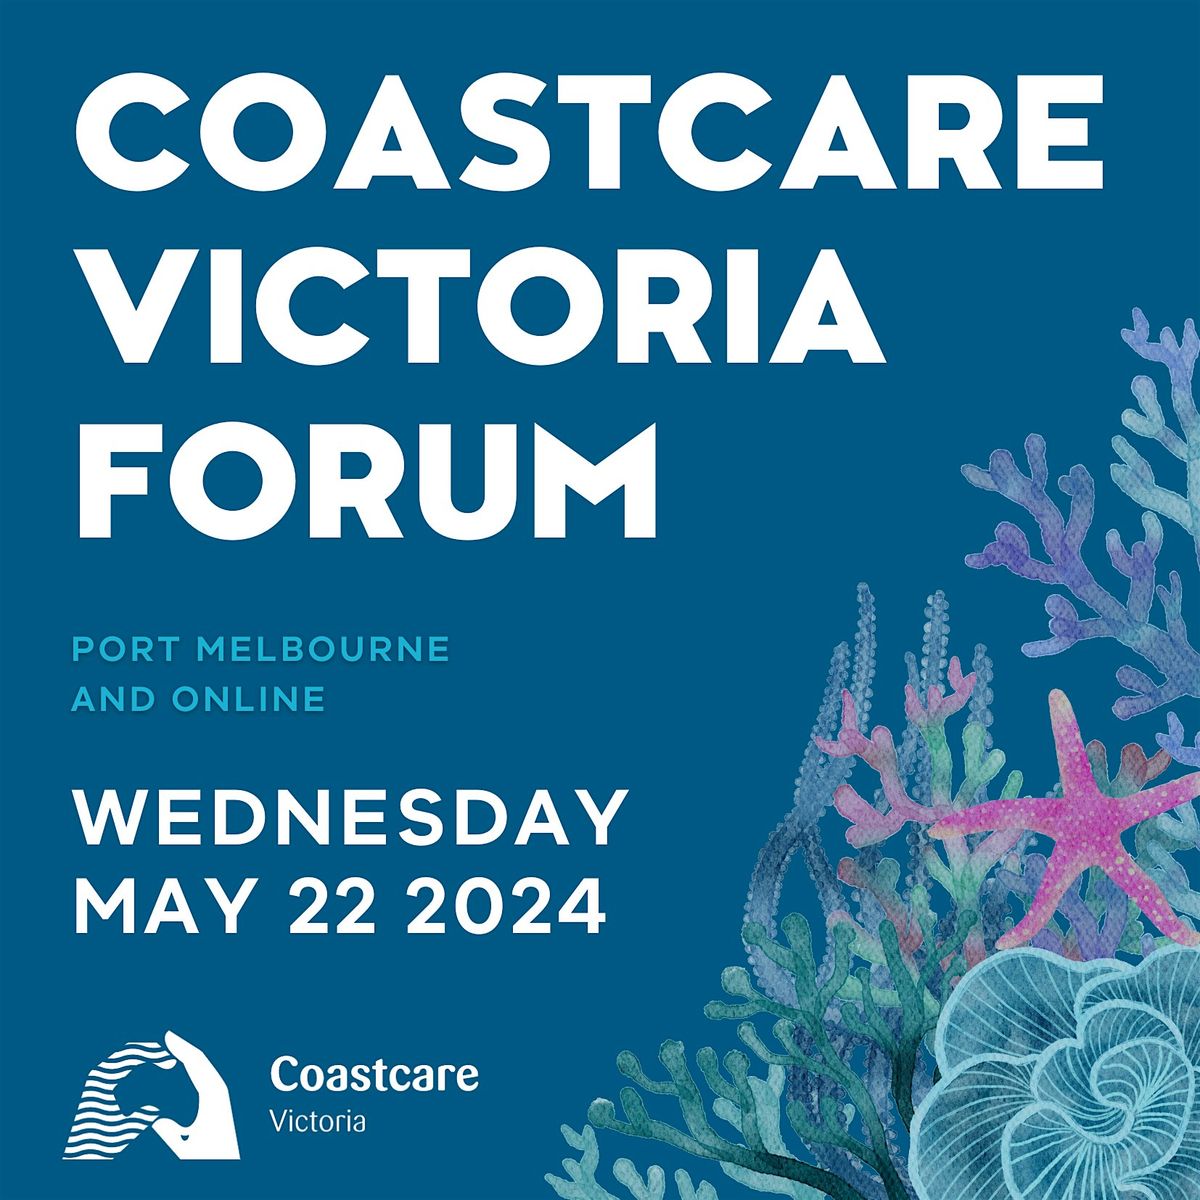 Coastcare Victoria 30 Year Forum